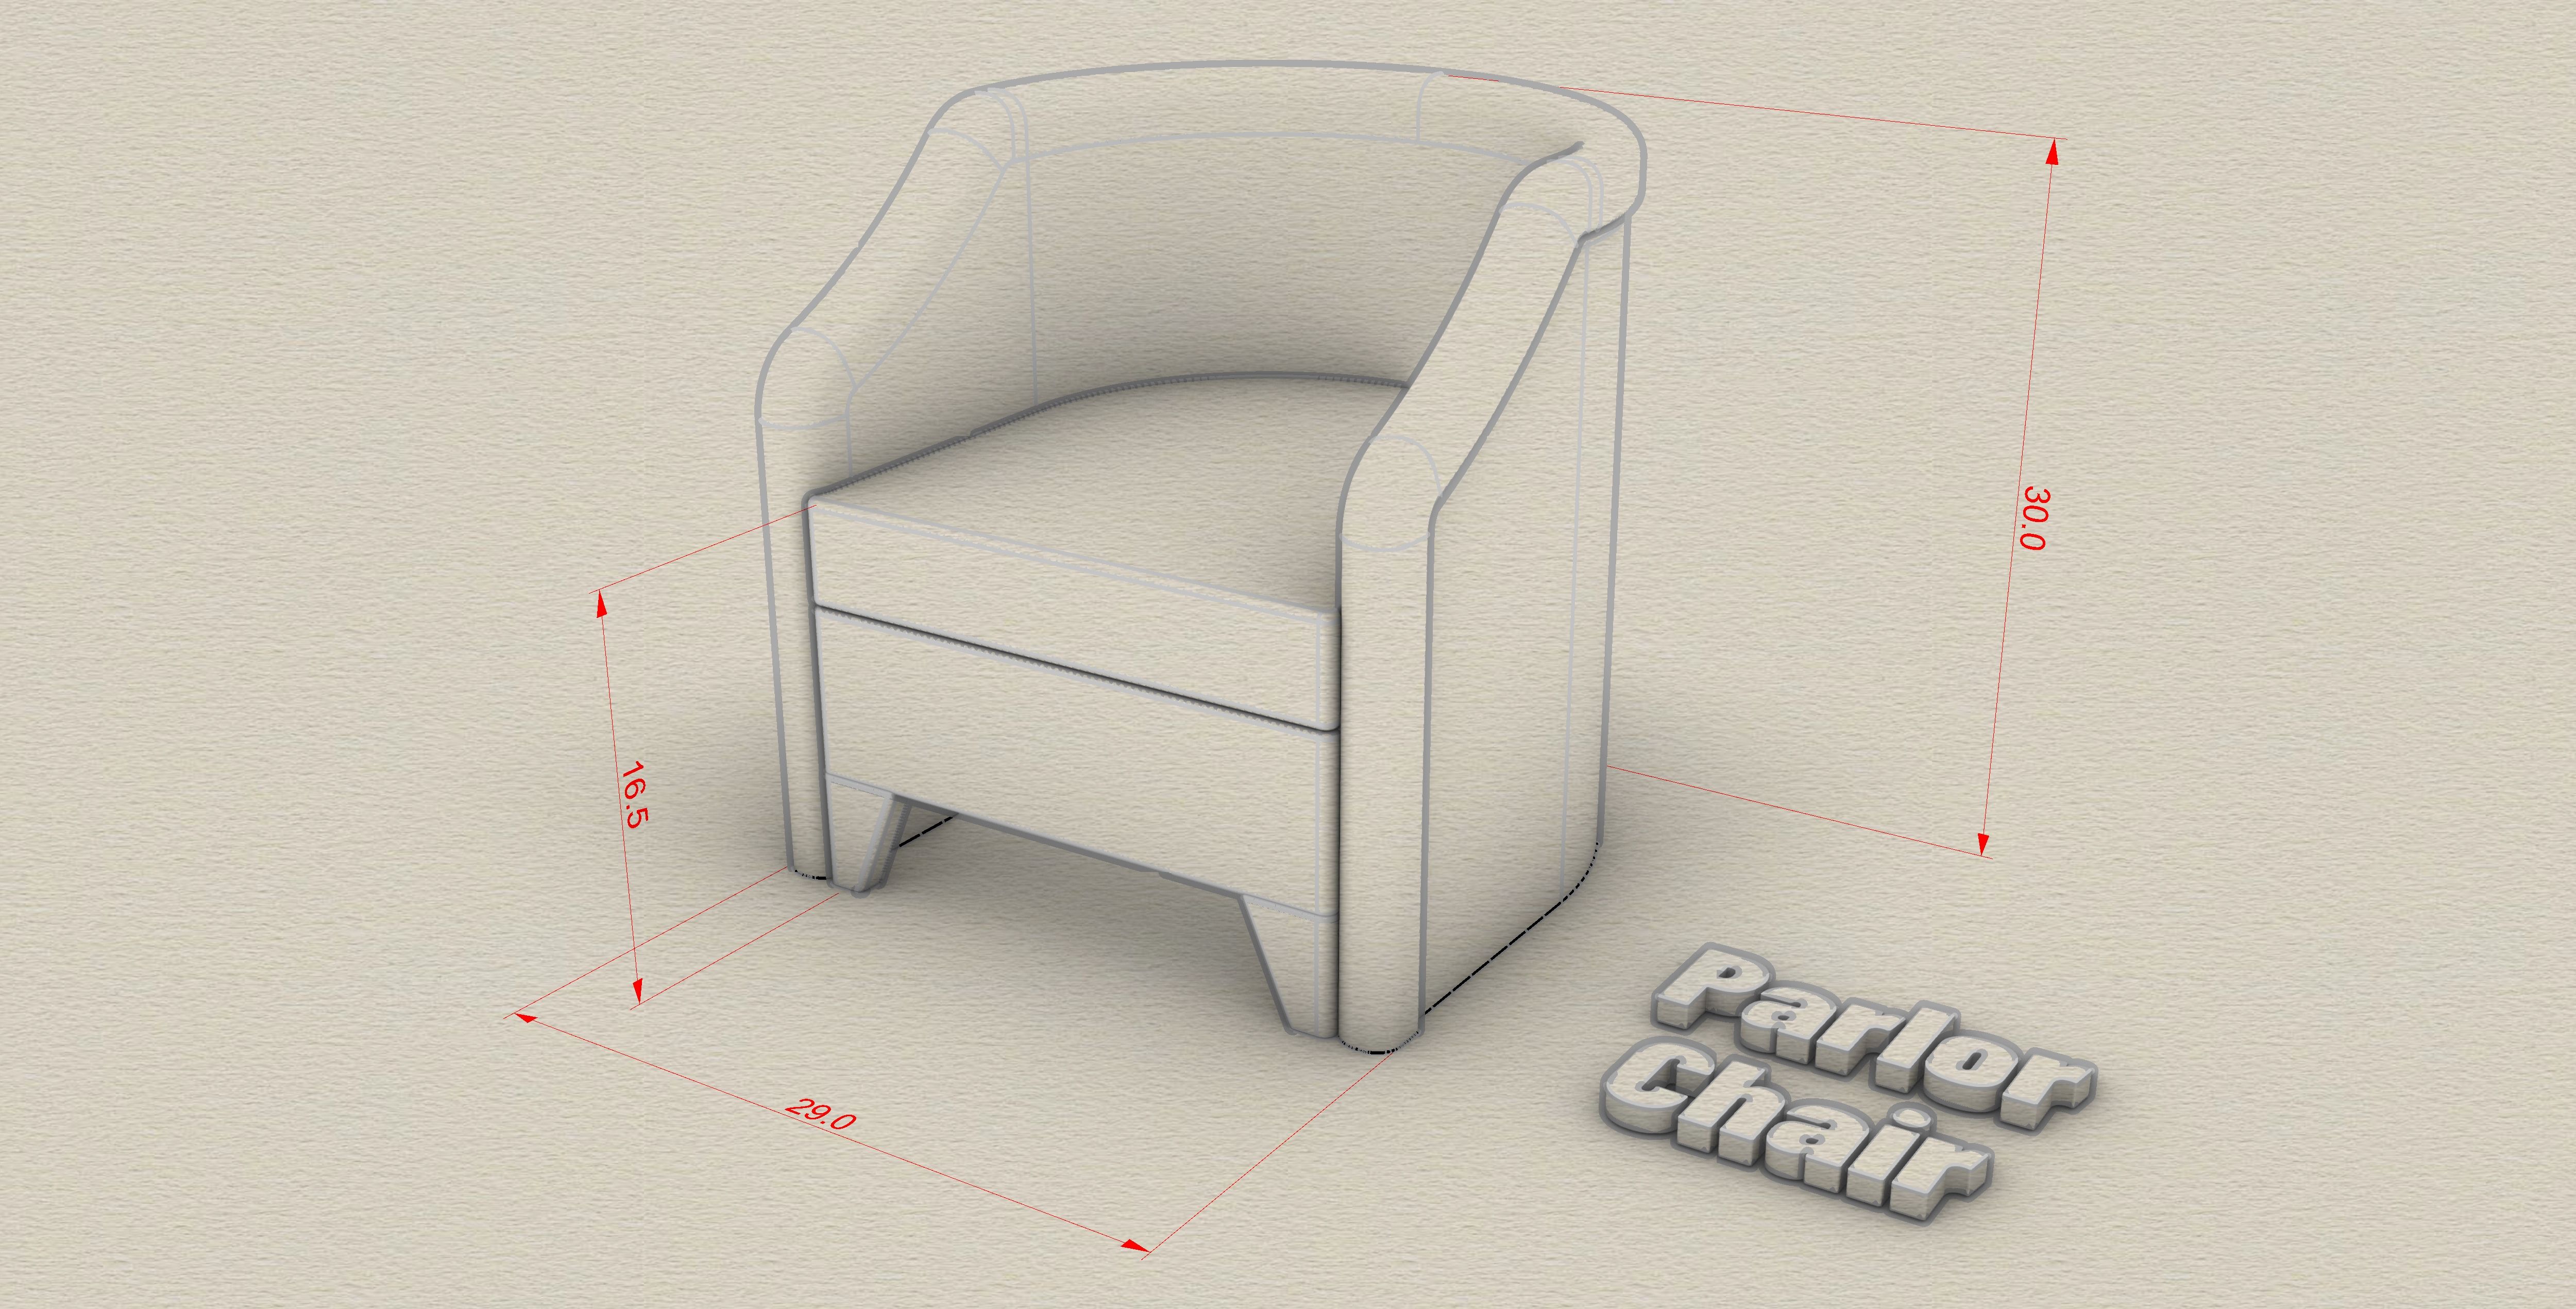 nightclub parlor chair 3d render with measures